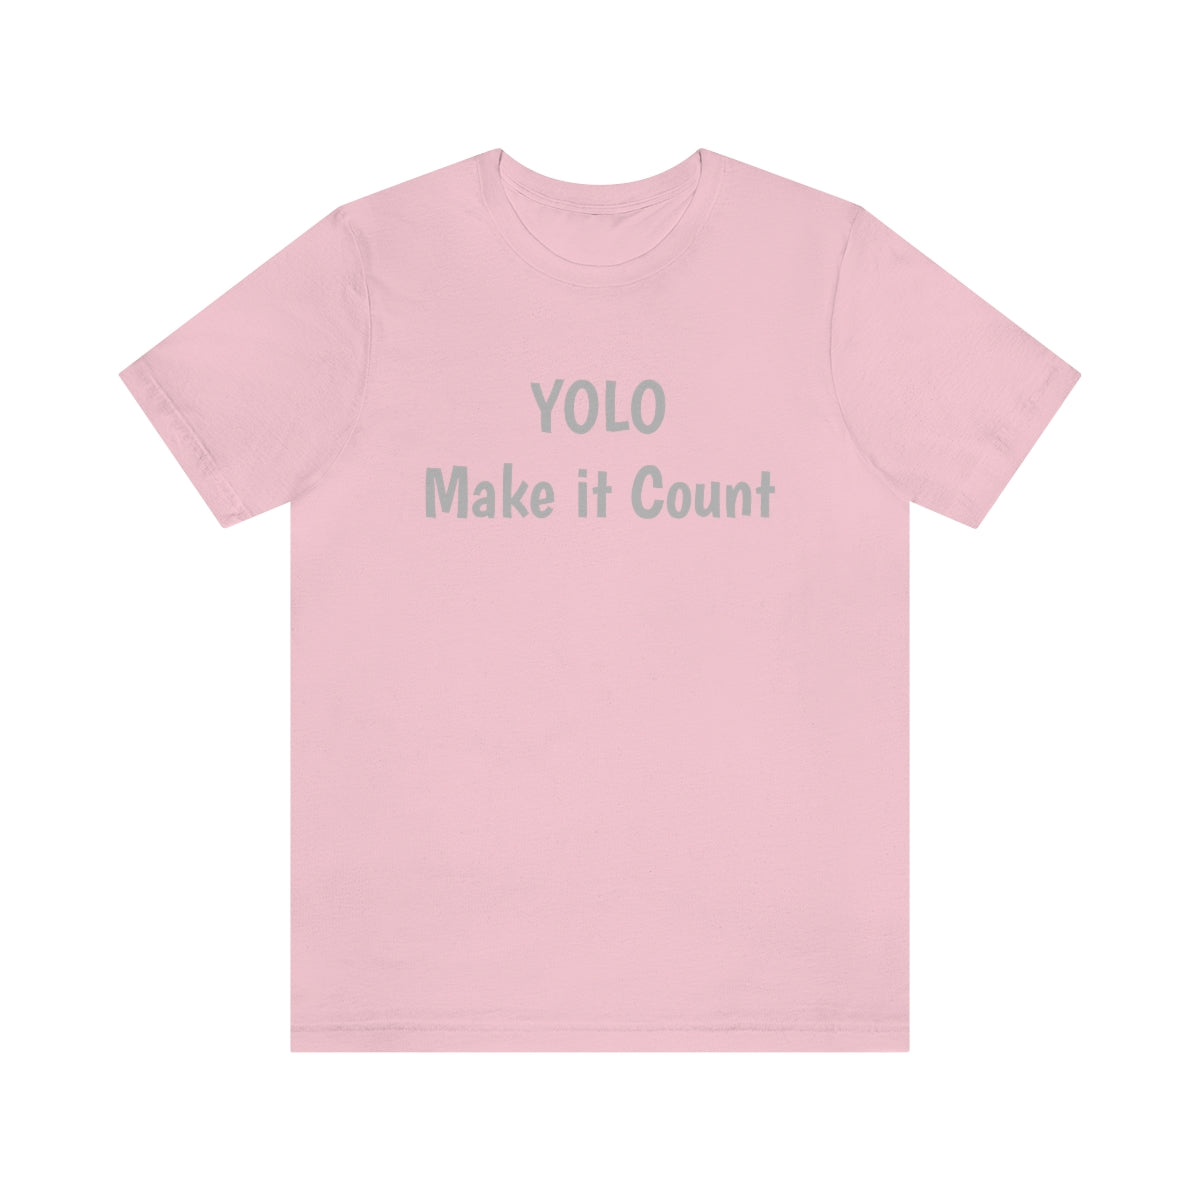 YOLO Make it Count - Unisex Jersey Short Sleeve Tee